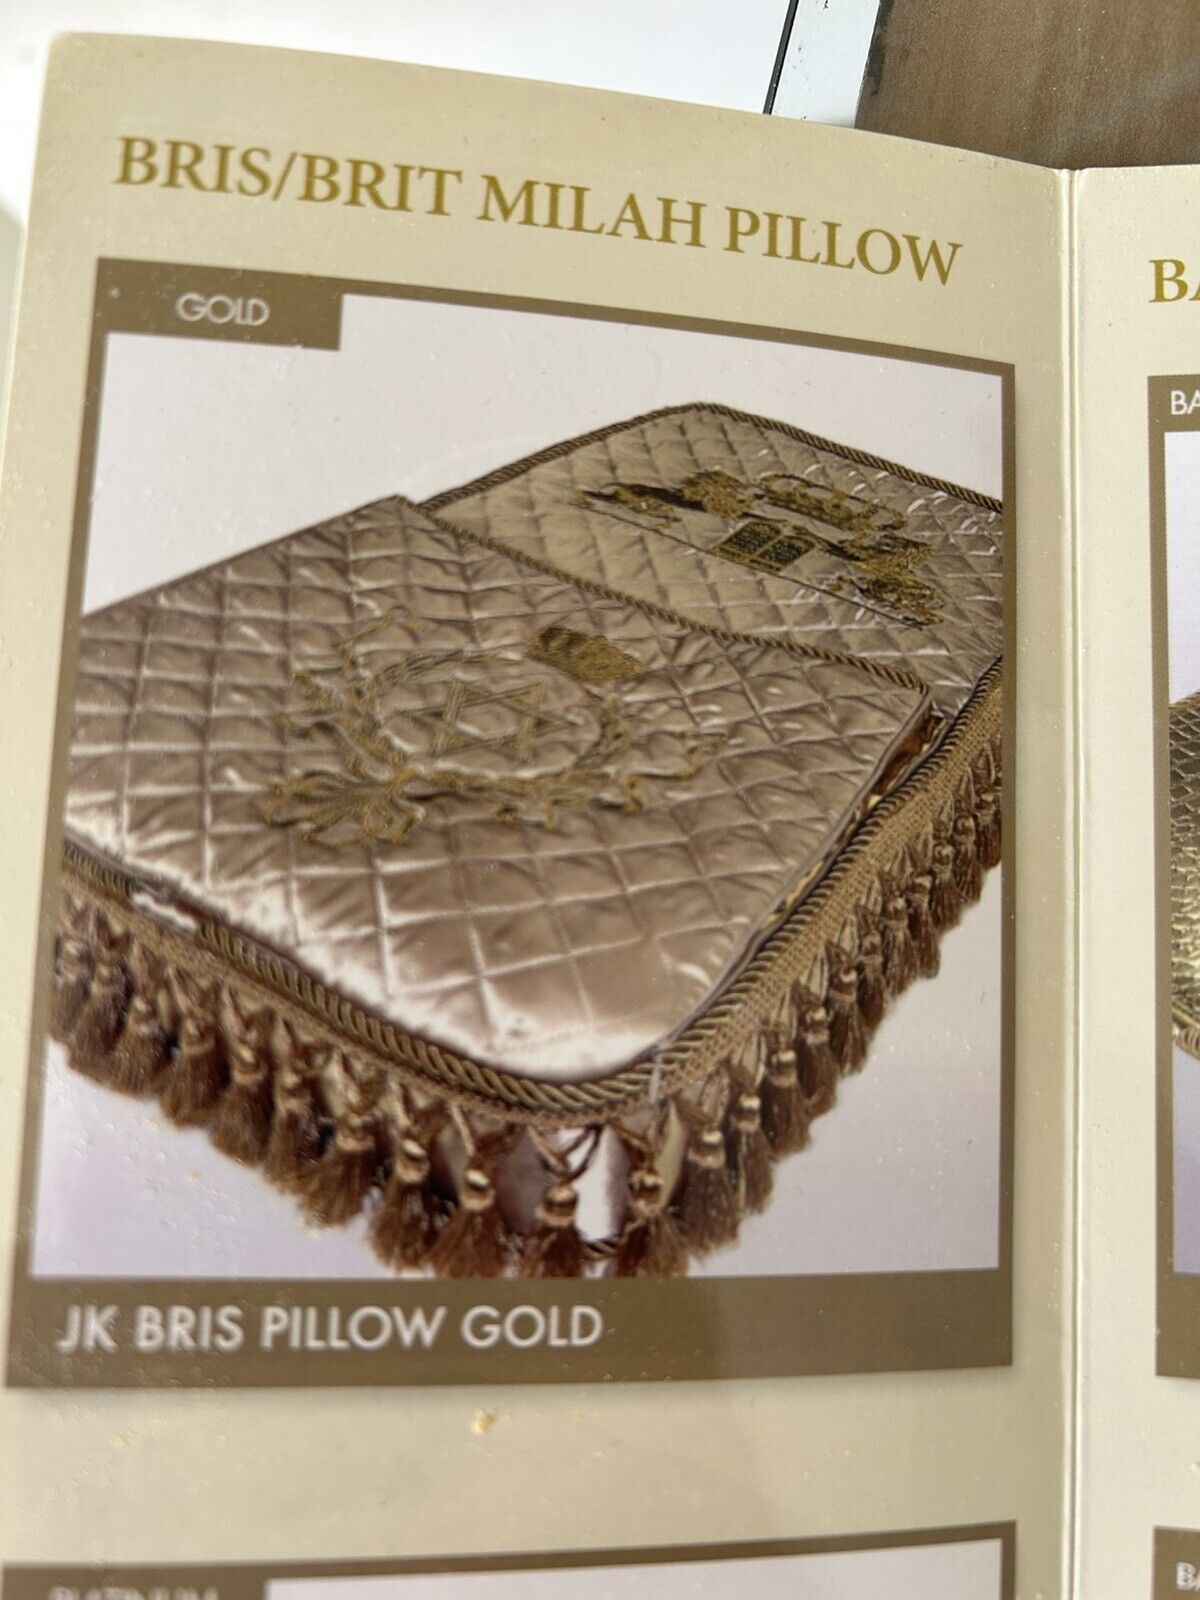 Gold quilted, ￼ hand made Bris Pillow - Brit Milah Pillow